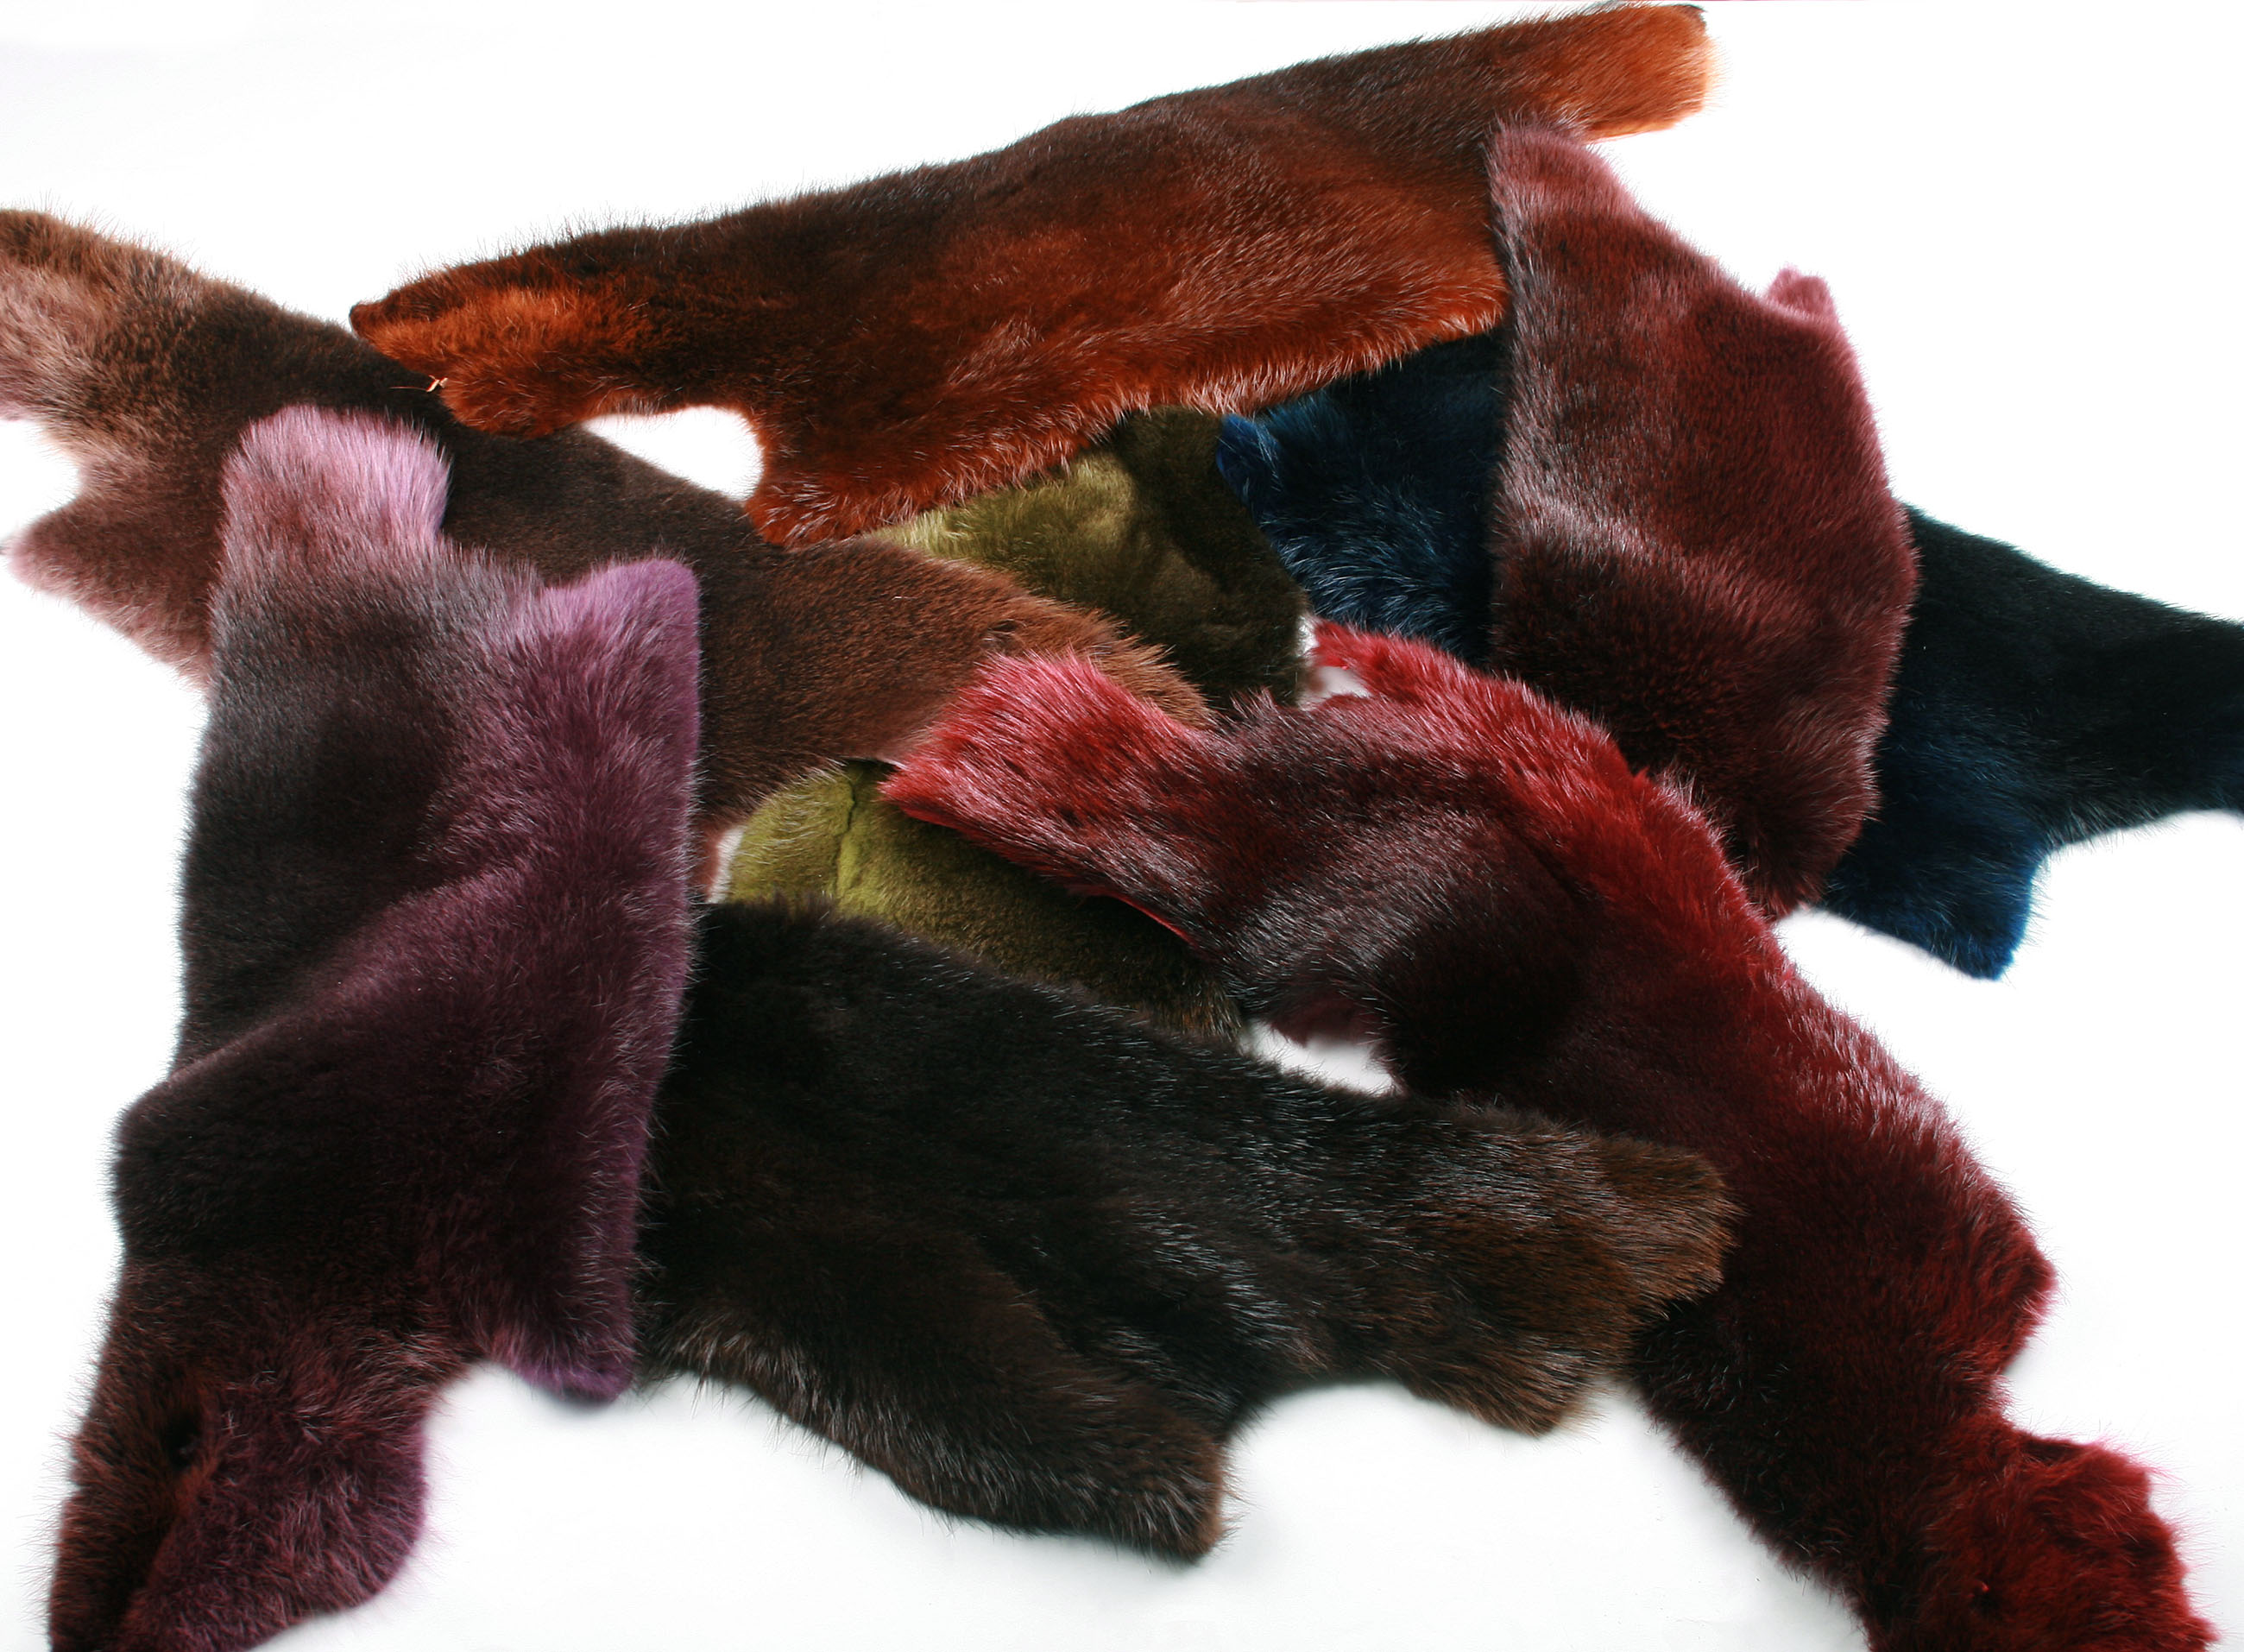 Custom Colorations for Beaver Skins (Fur Harvesters)